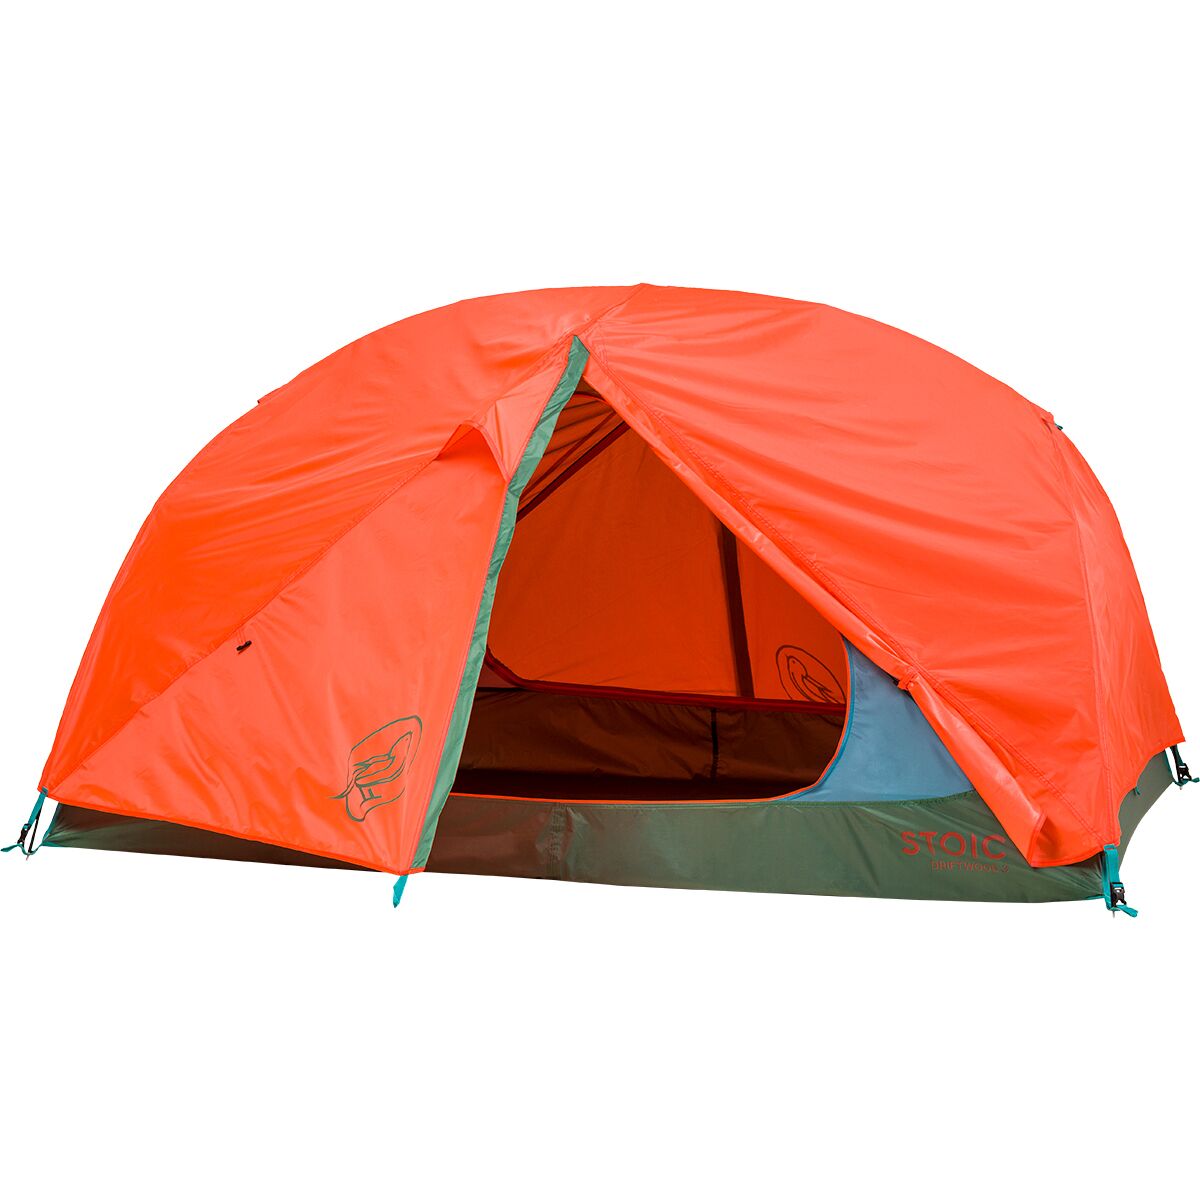 Stoic Driftwood 3 Tent: 3-person 3-season